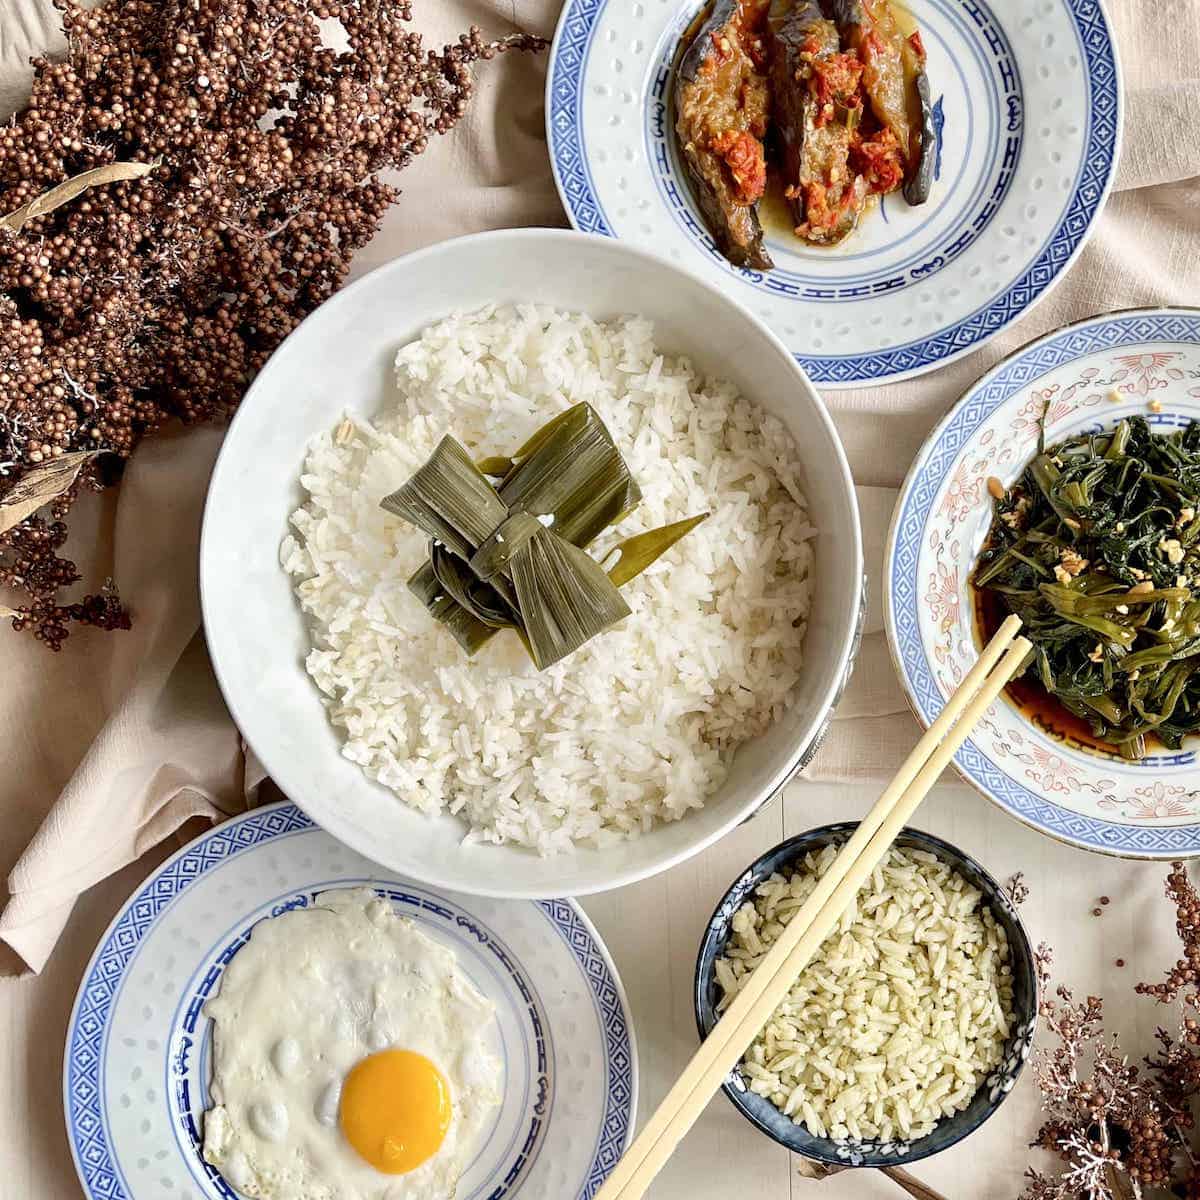 A Singporean meal with 2 types of pandan rice, fried egg, eggplant and sambal kangkong.